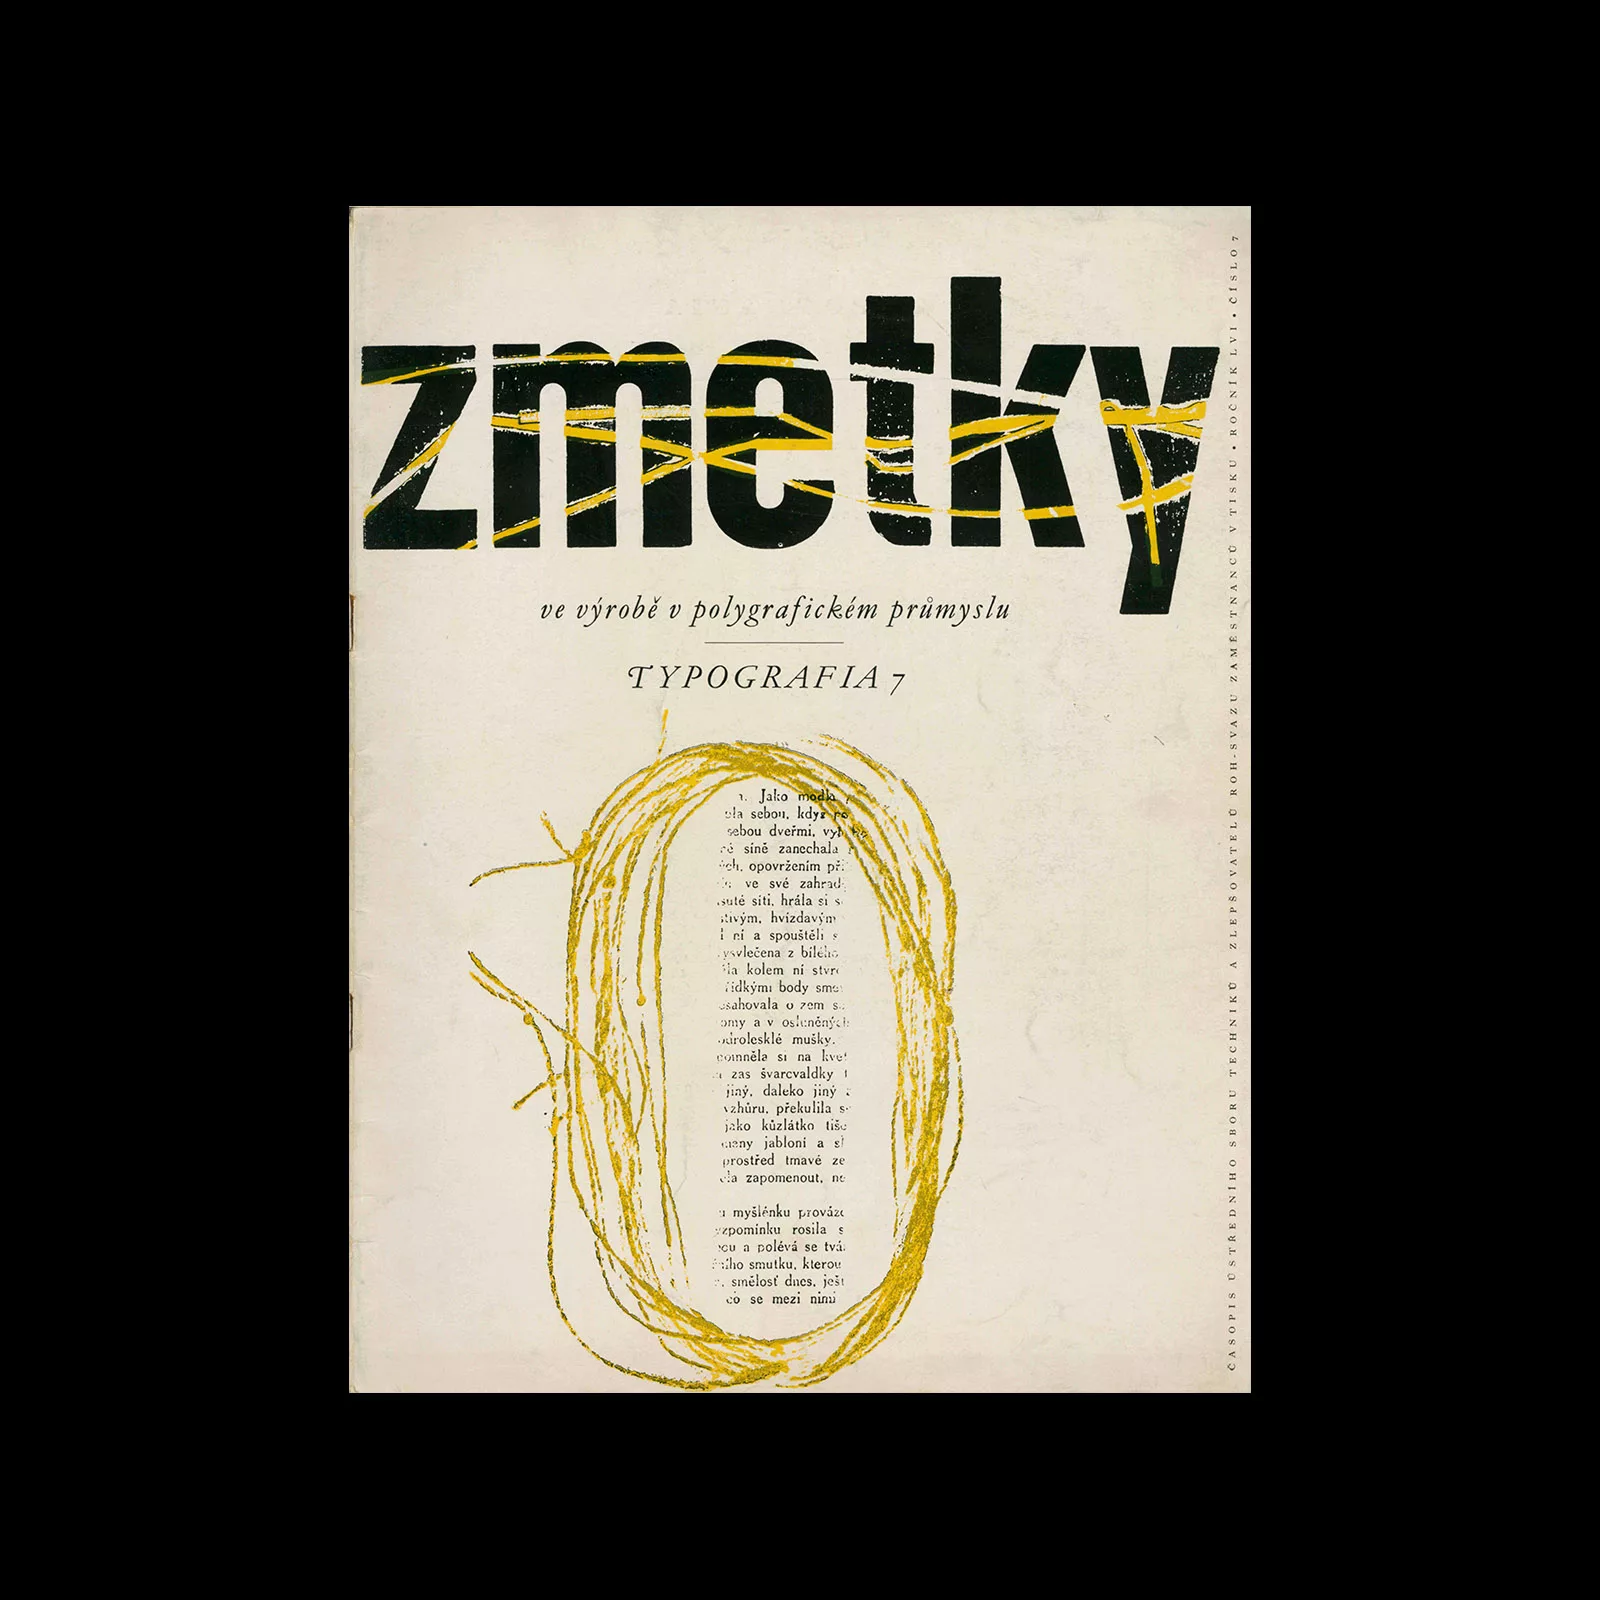 Typografia, ročník 56, 07, 1953. Cover design by Oldřich Hlavsa